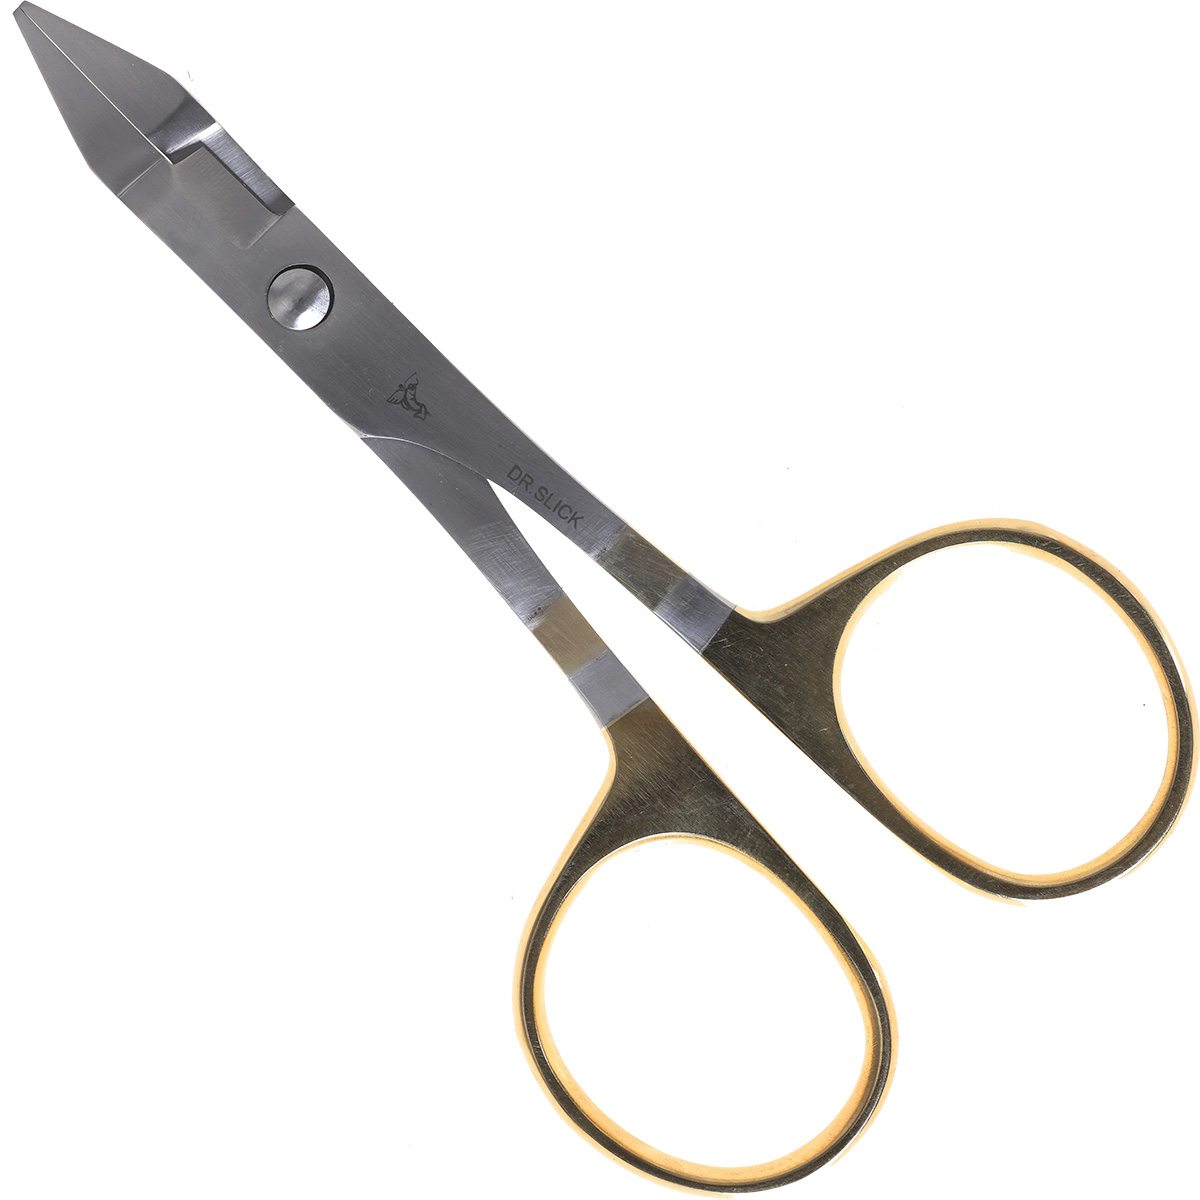 Dr Slick 4.75 Gold Barb Crusher Scissor Clamp